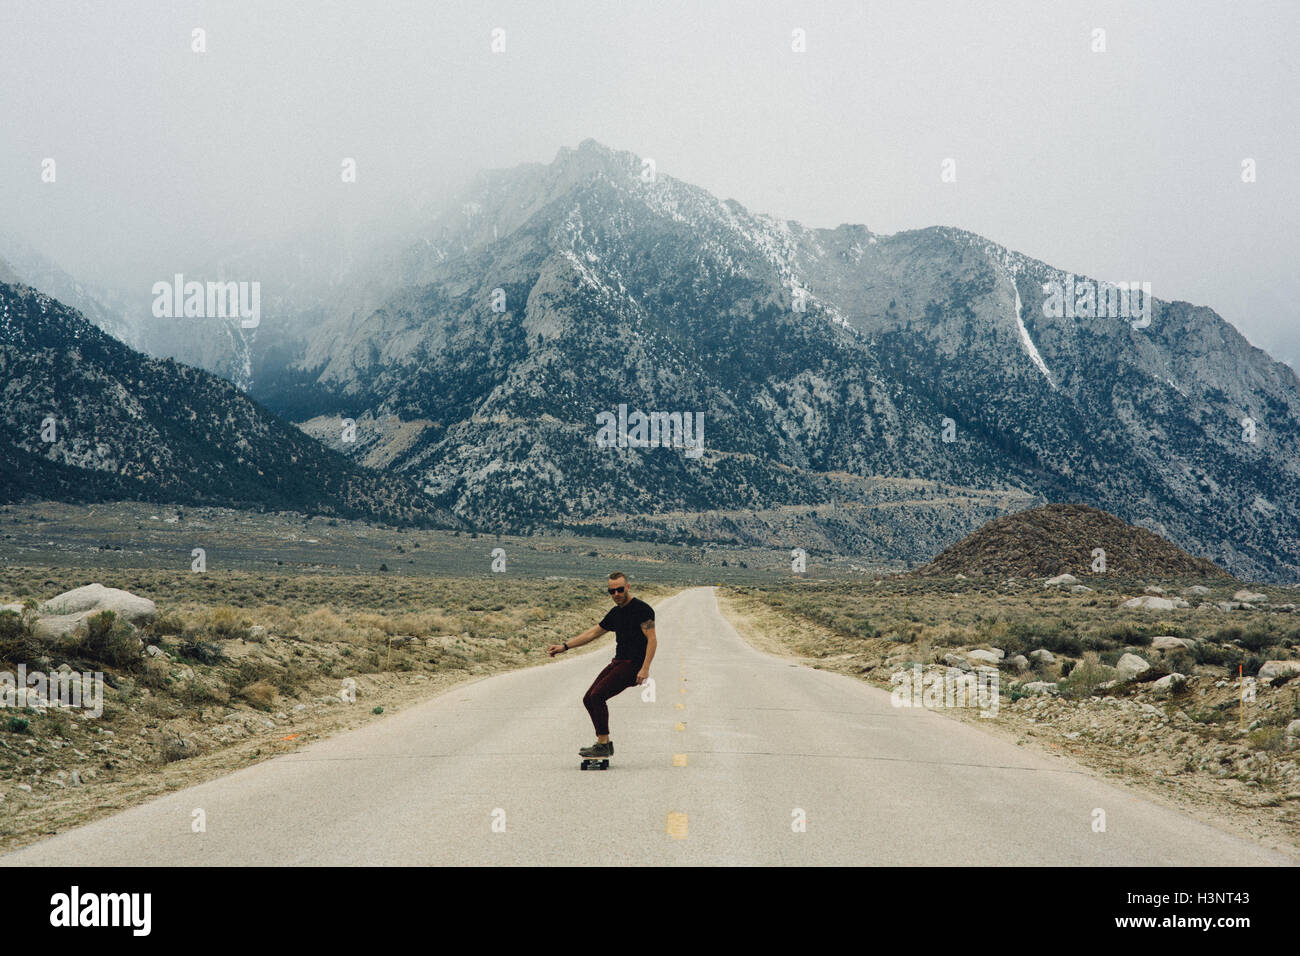 Man skateboarding on road by mountains, Lone Pine, California, USA Stock Photo